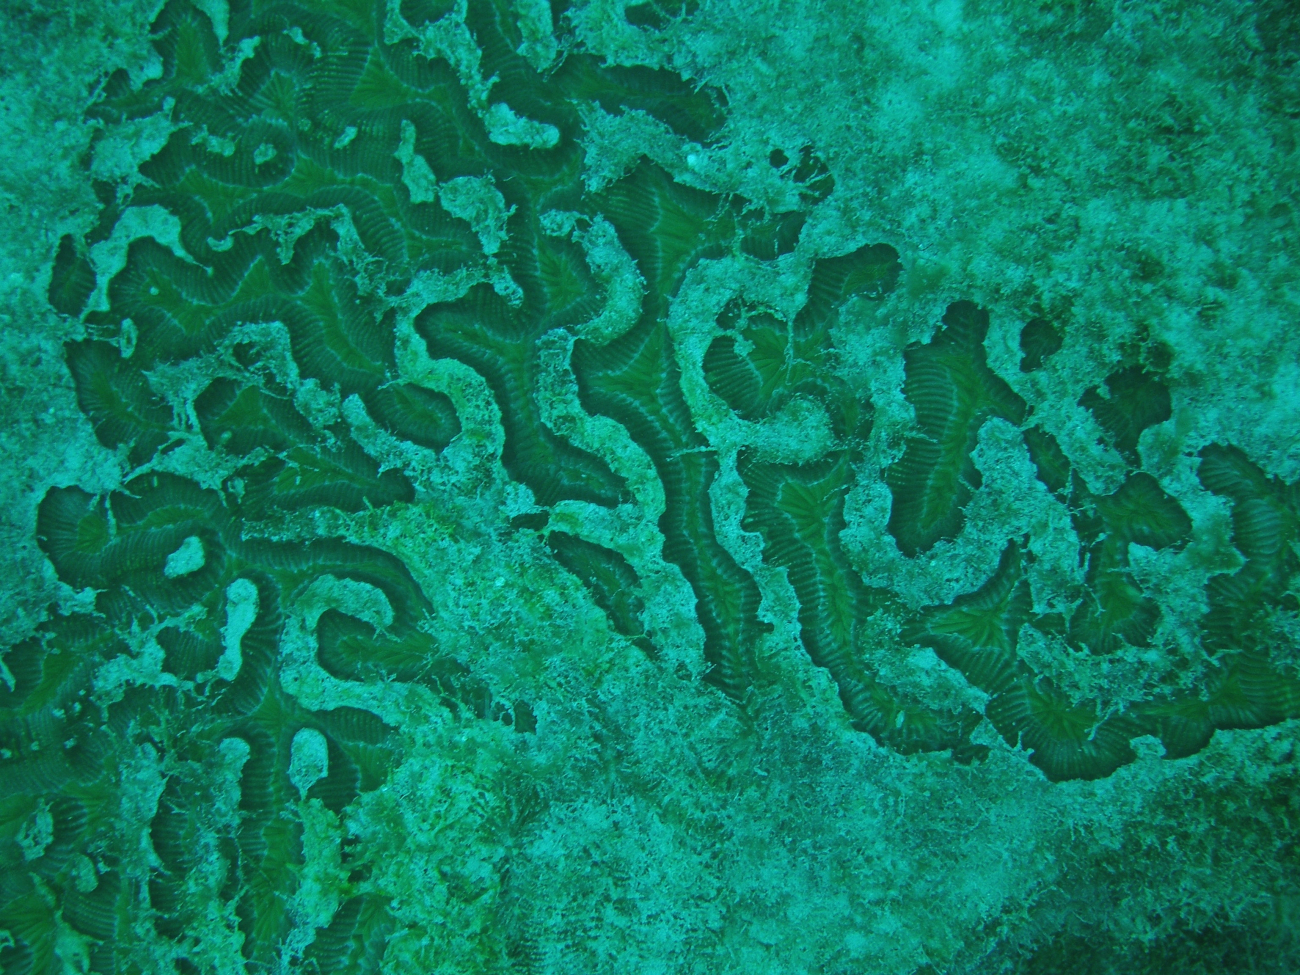 Boulder brain coral (Colpophyllia natans) and turf algae